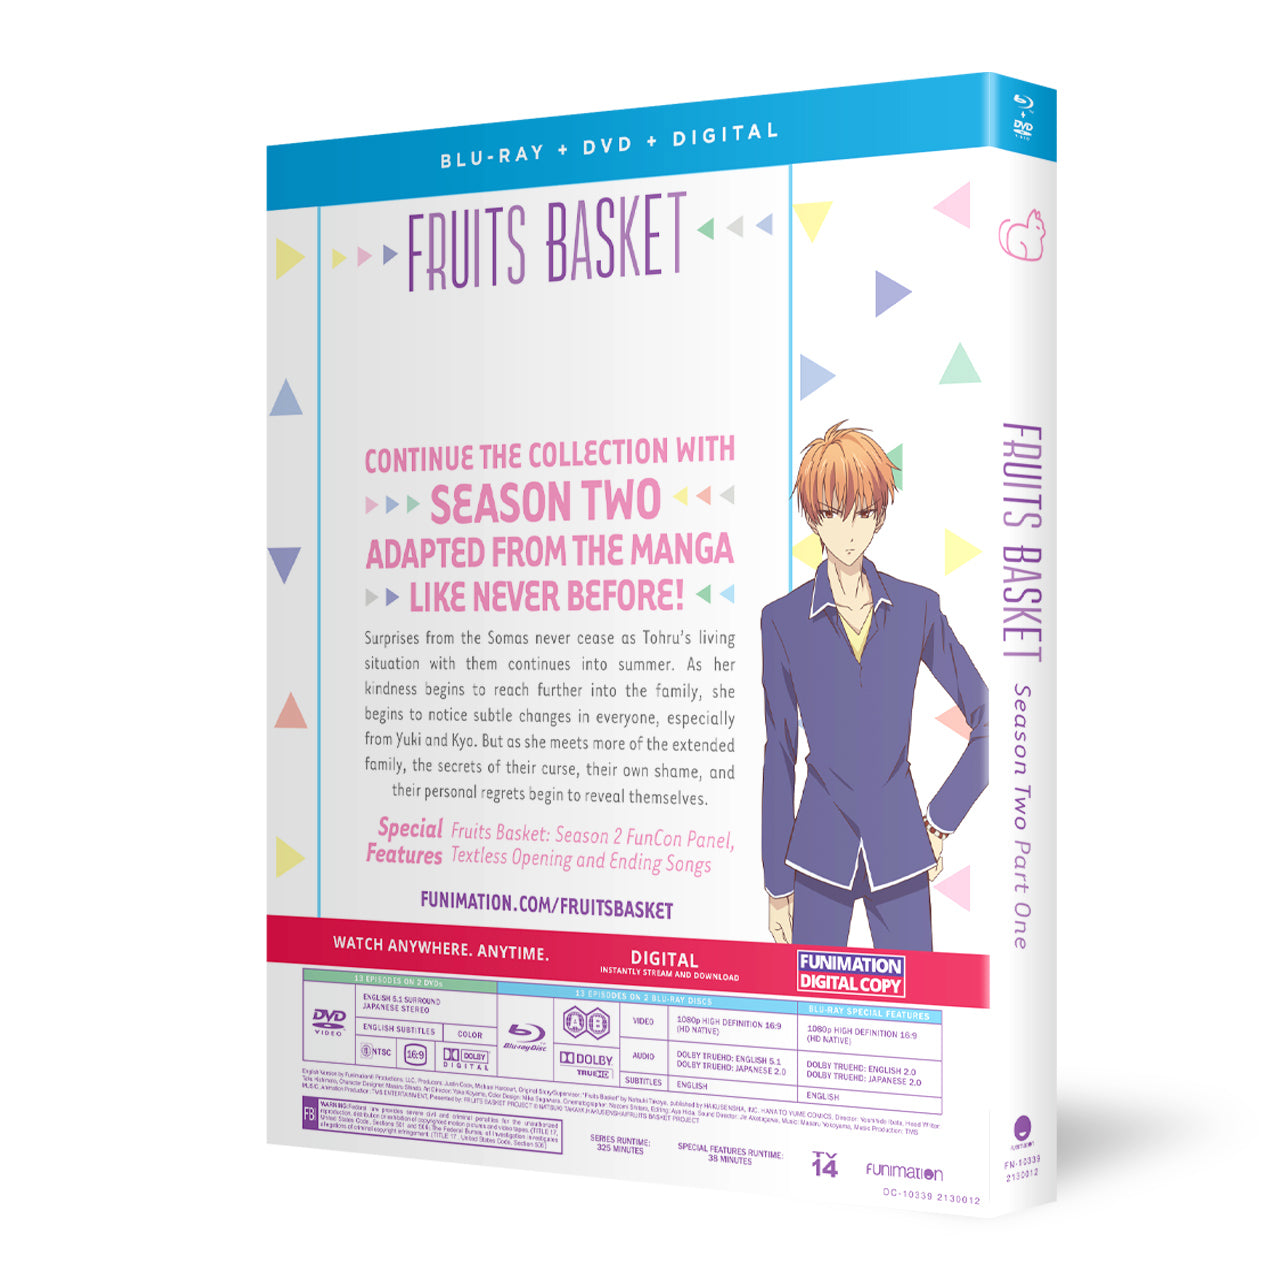 Fruits Basket (2019) - Season 2 Part 1 - Blu-ray + DVD image count 2